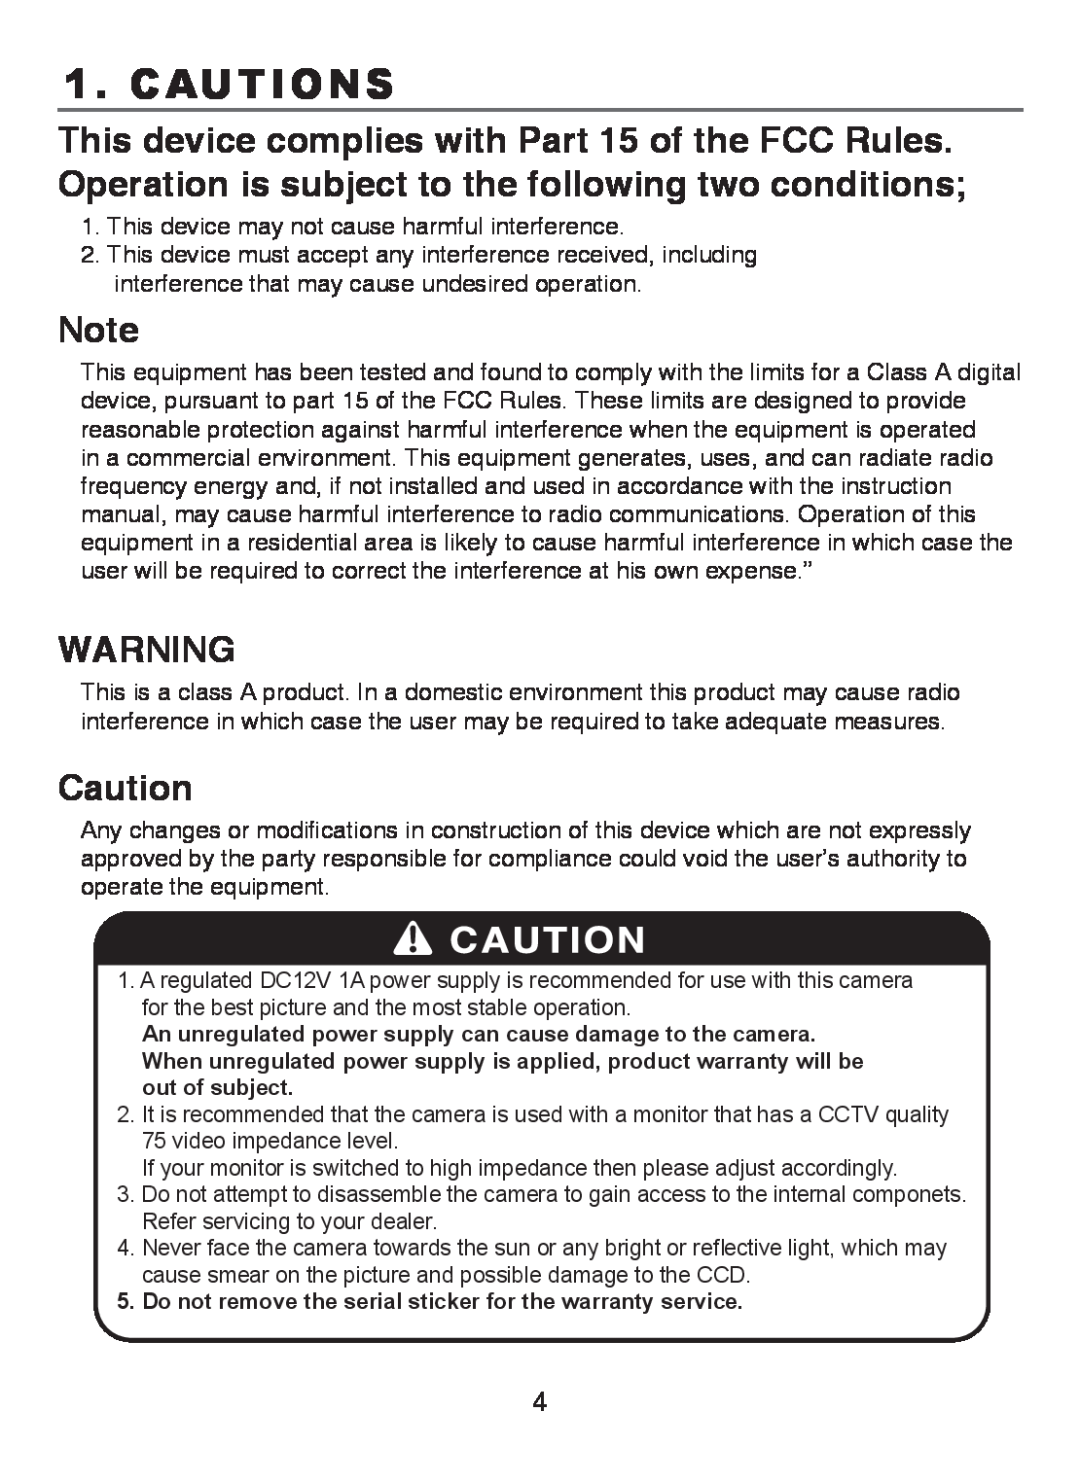 EverFocus M107-N501-001 operation manual Cautions 